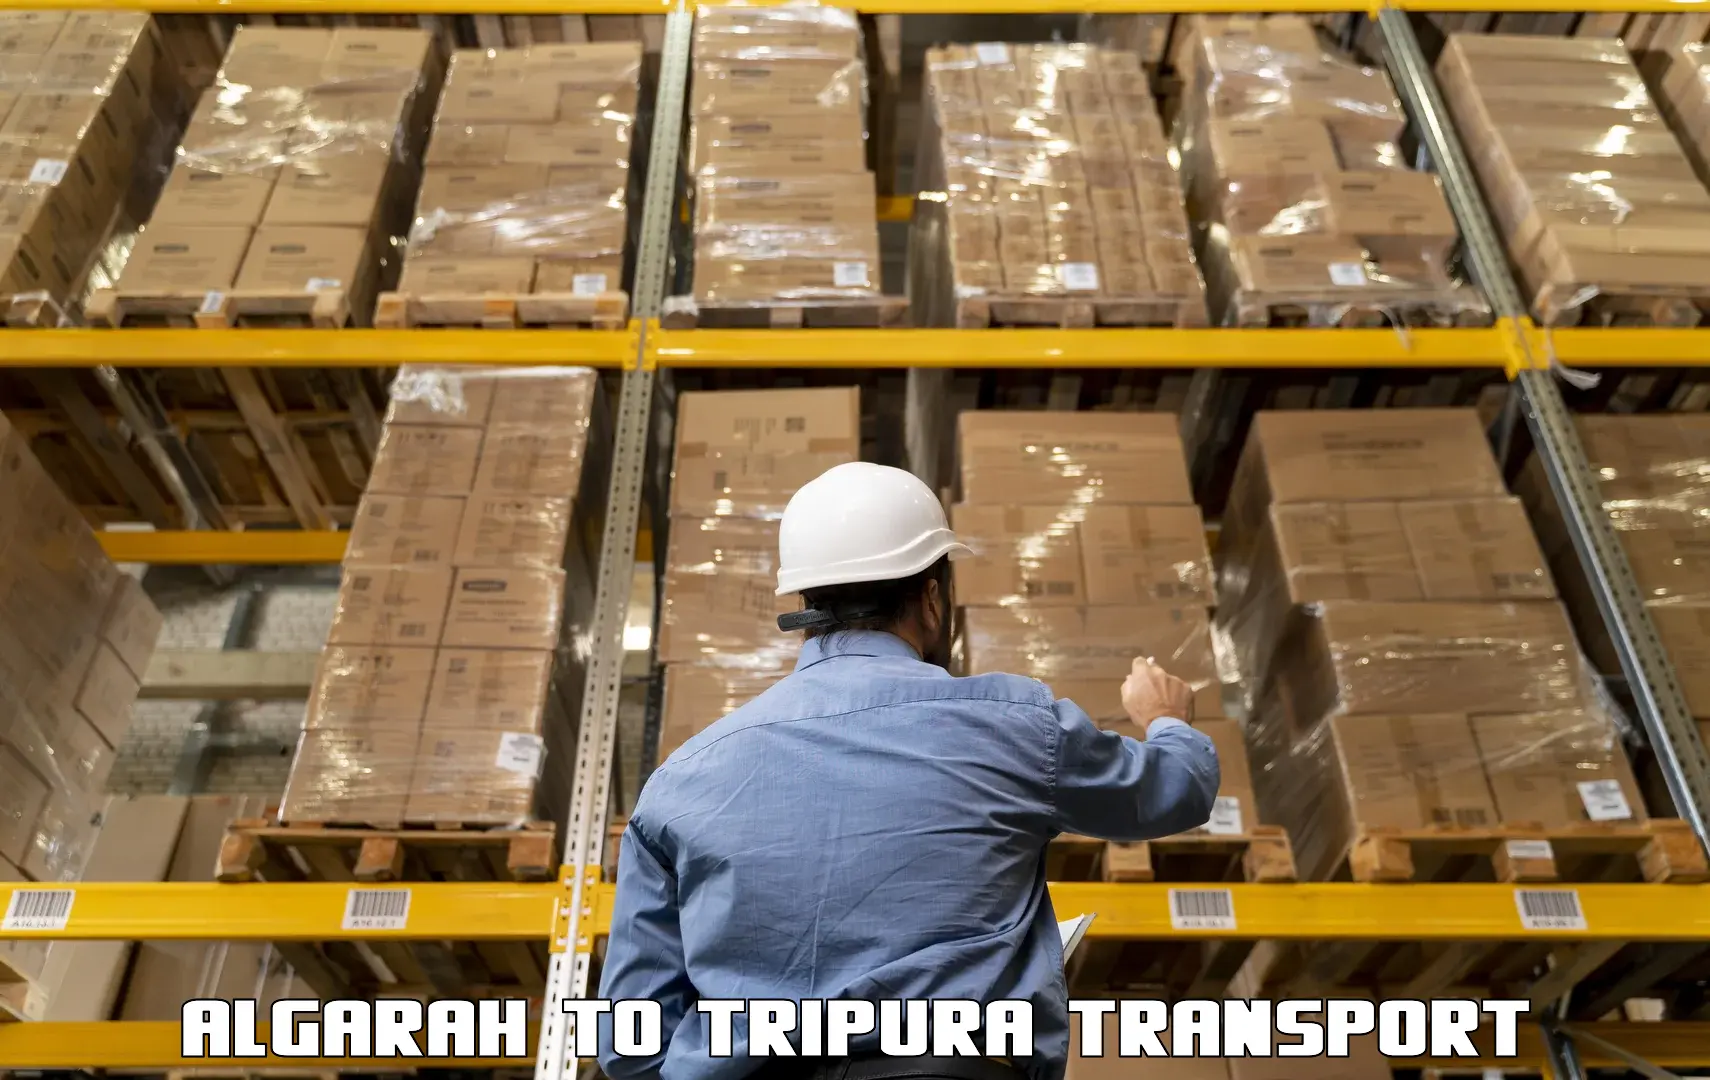 Road transport online services Algarah to South Tripura